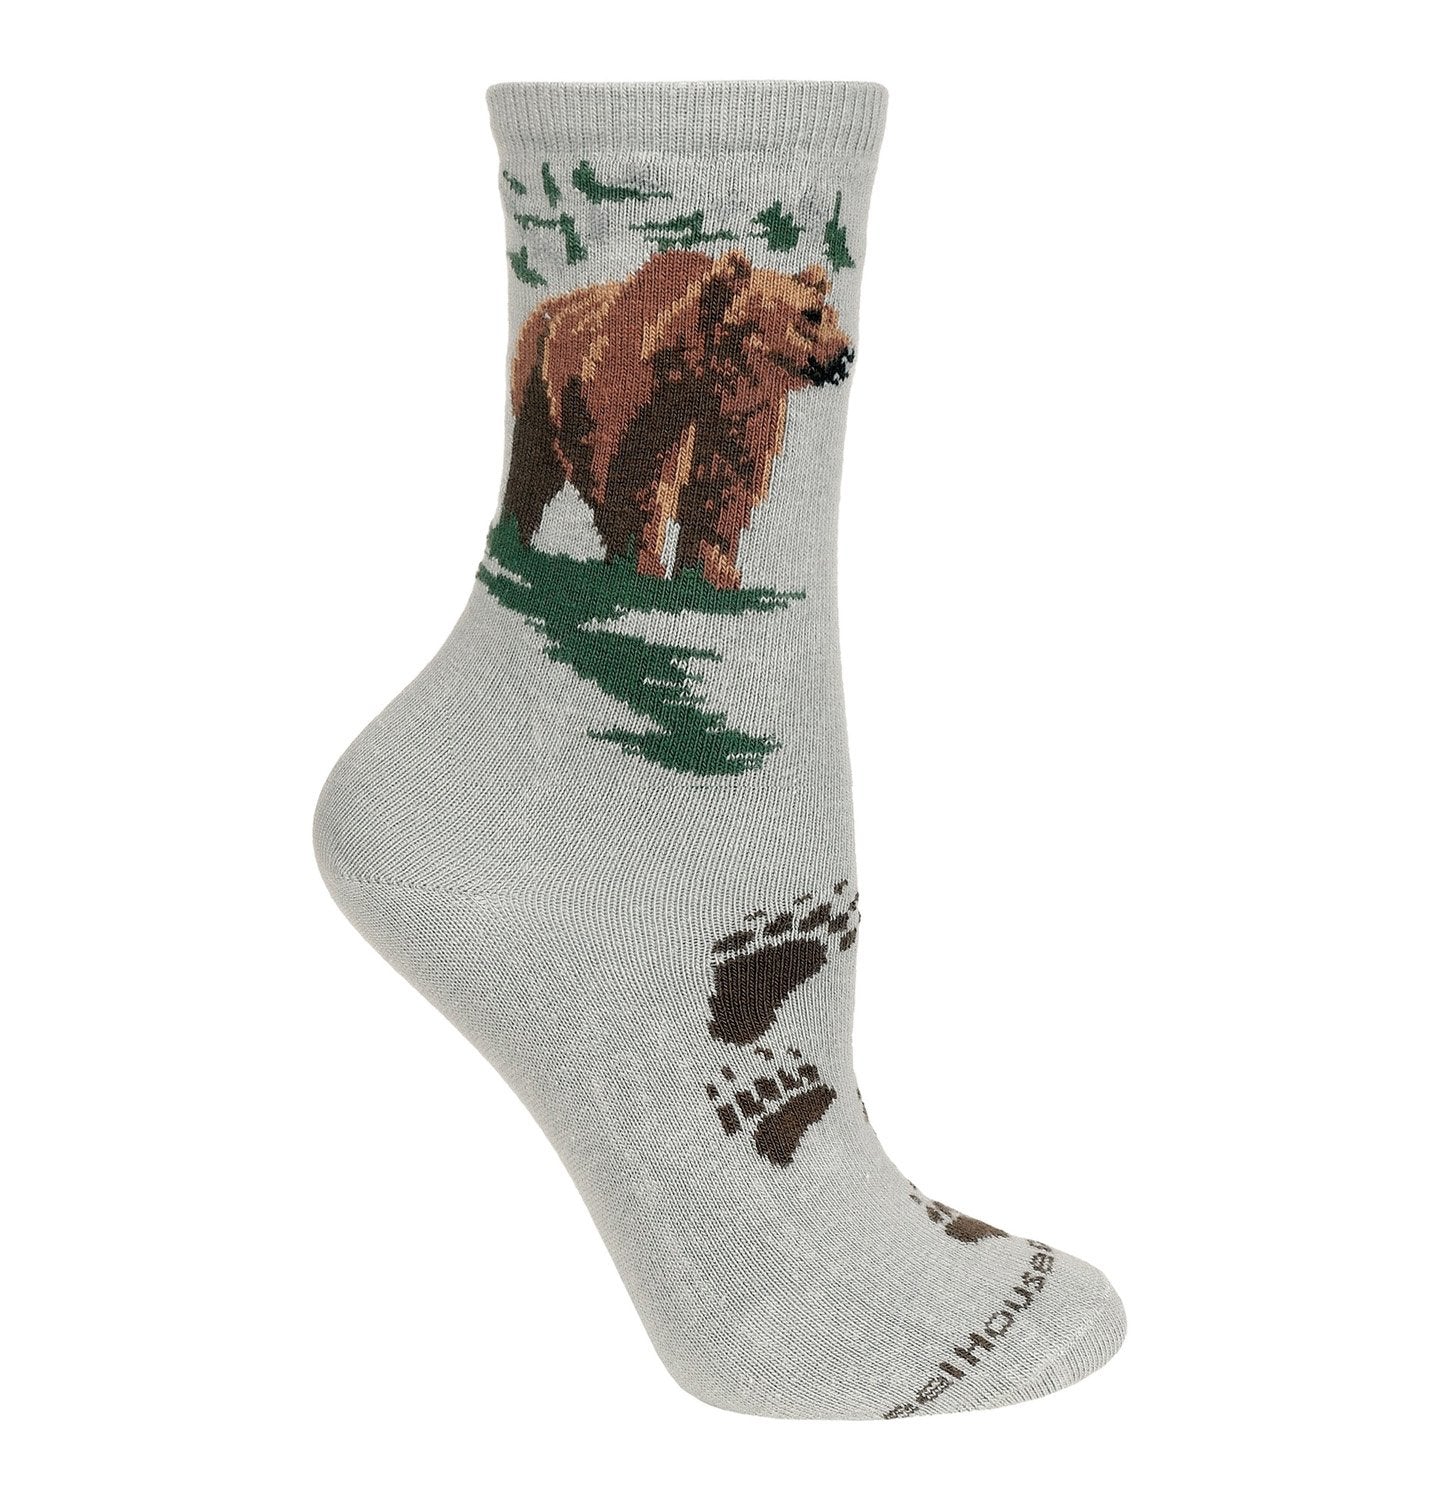 Animal Pride - Grizzly Bear on Grey - Adult Cotton Crew Socks